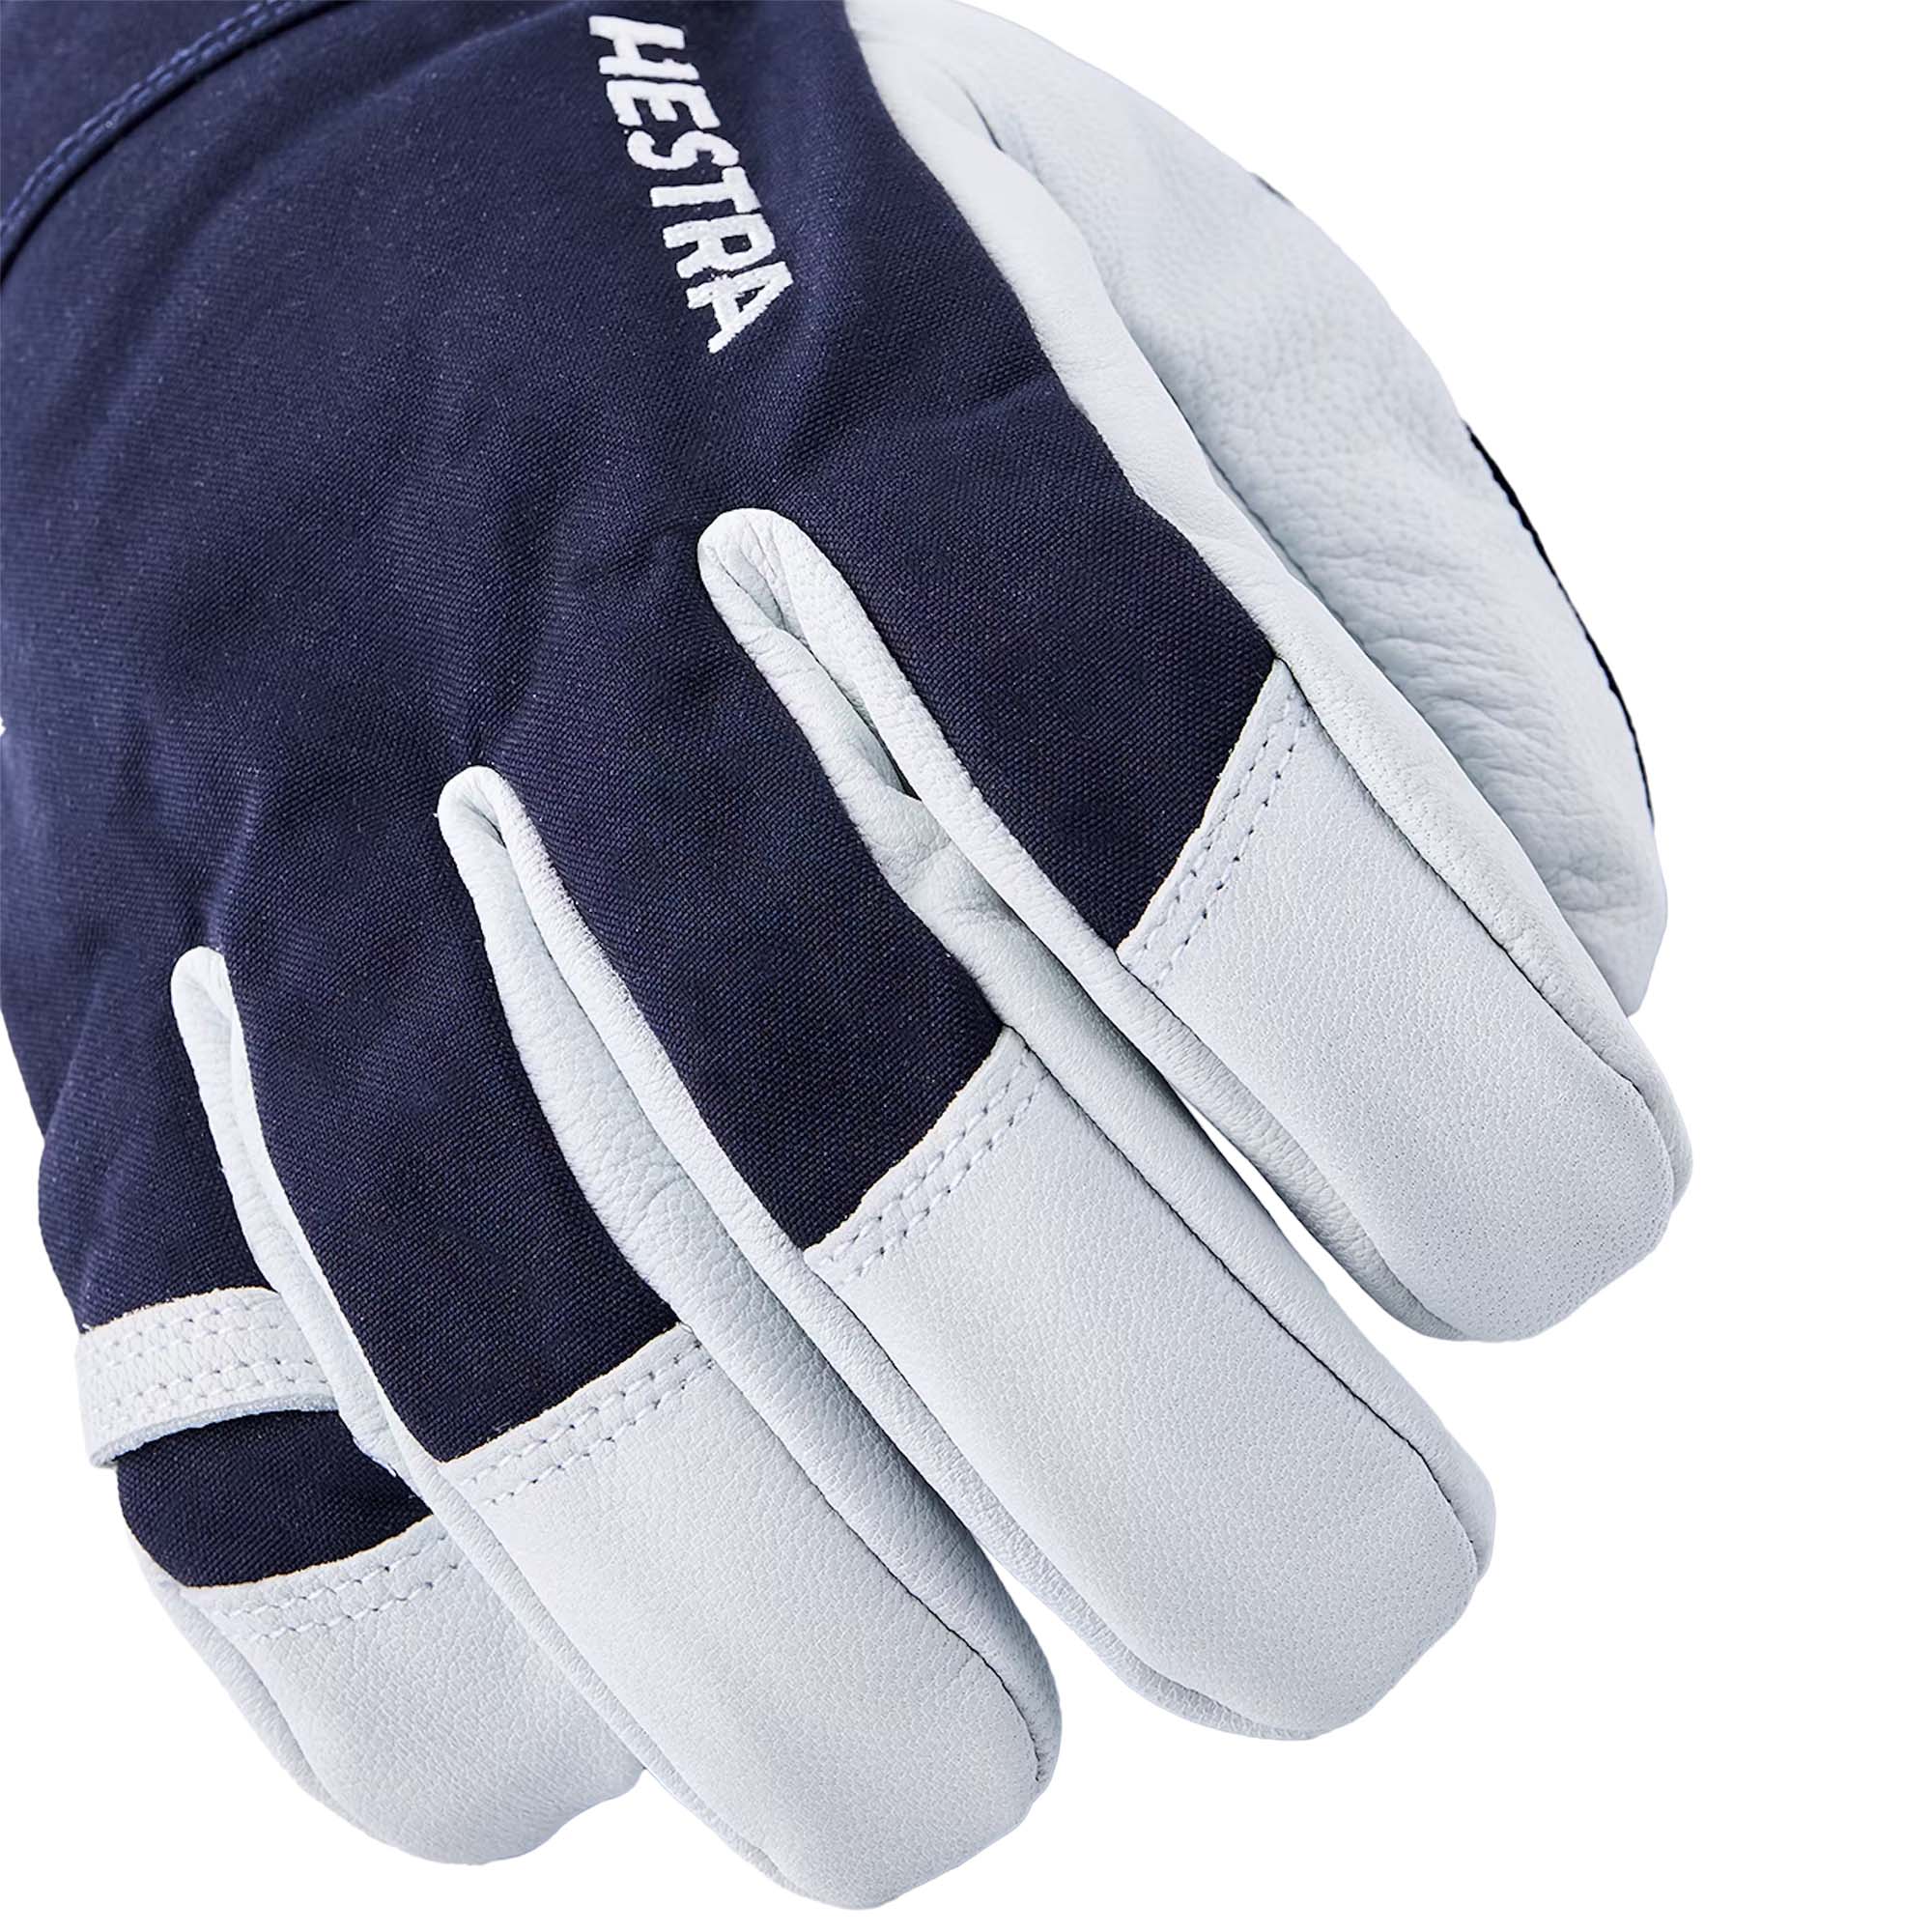 Hestra Army Leather Heli Waterproof Snowboard Gloves